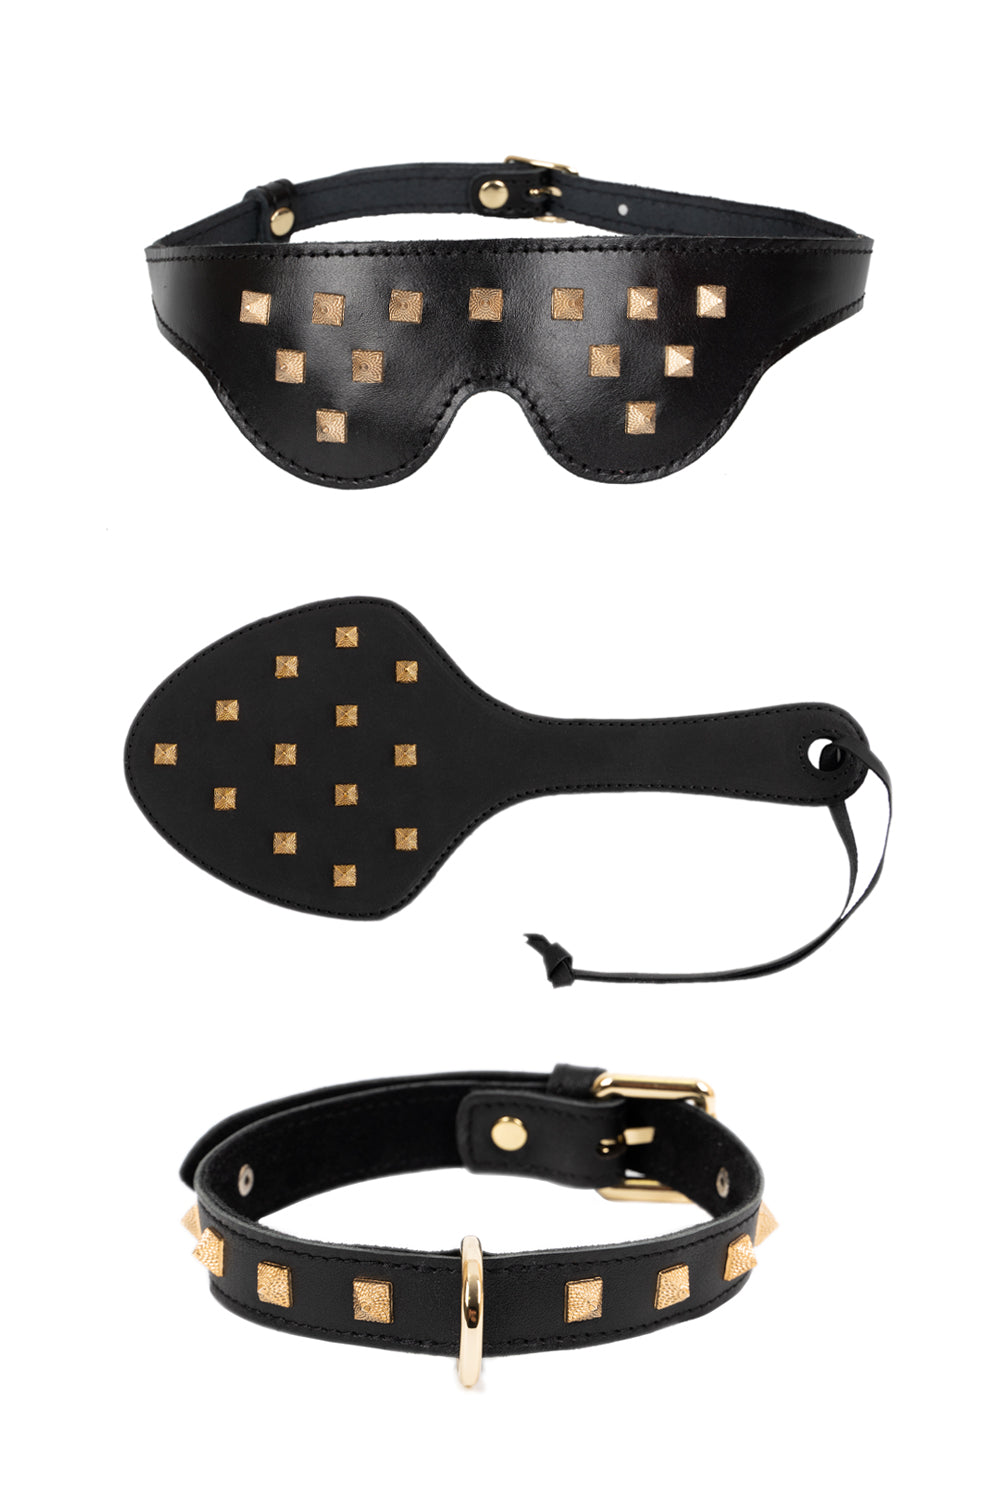 3 in 1 Leather Luxury Set with Spikes. Blindfold Mask, Spanking Paddle, Choker